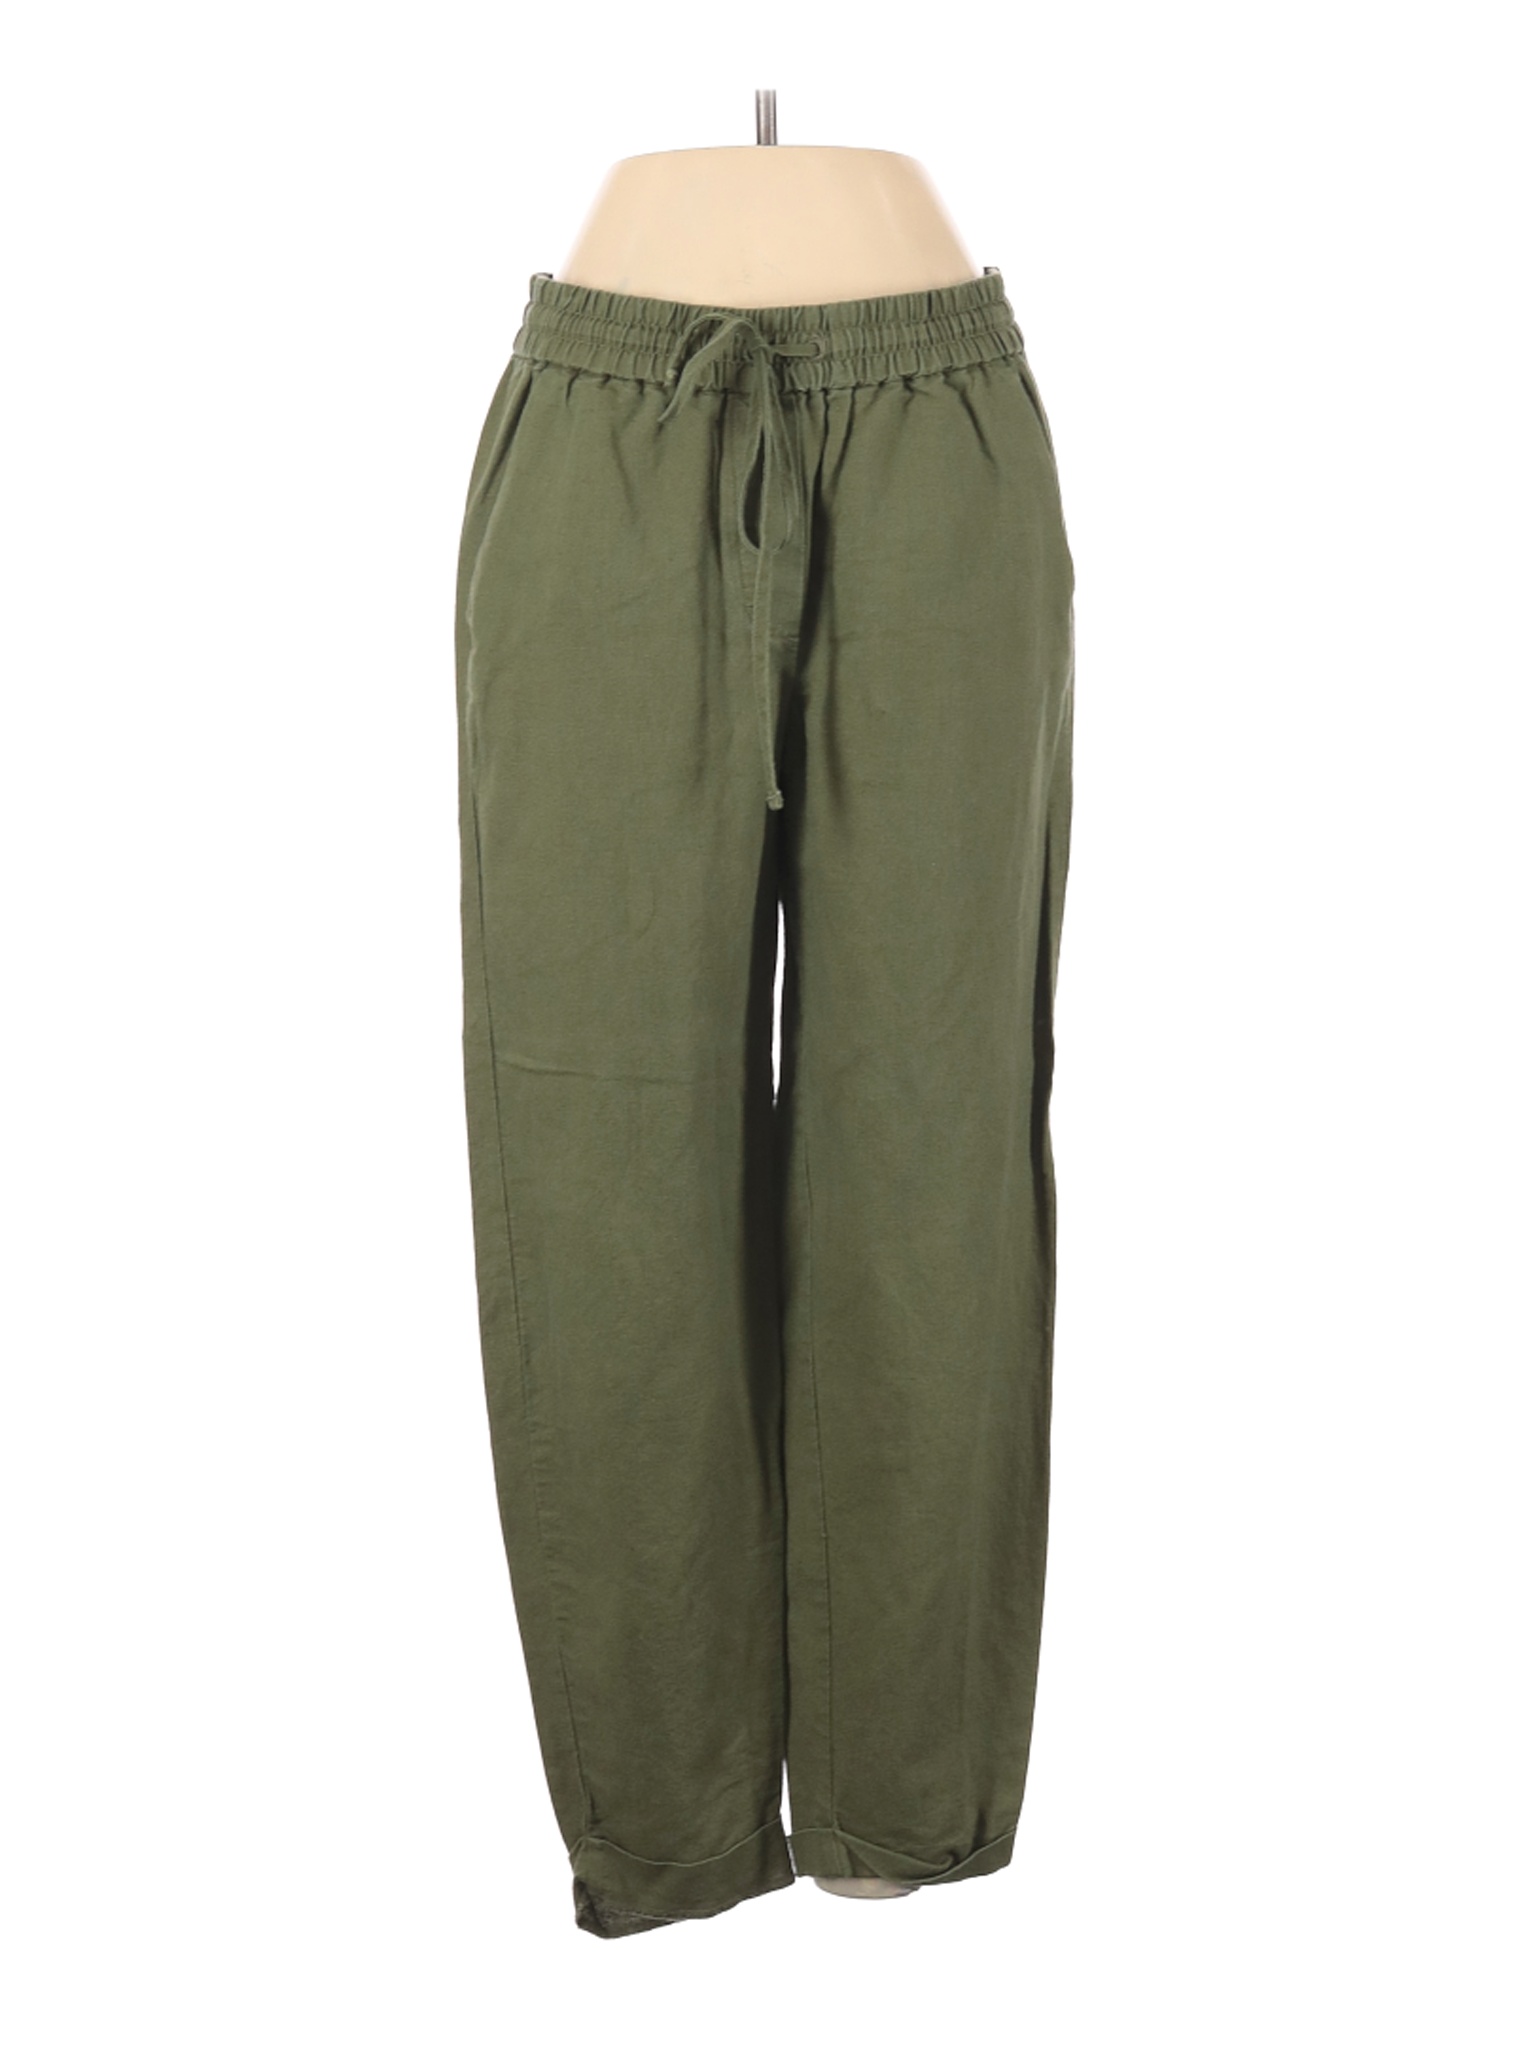 J.Crew Factory Store Women Green Linen Pants 4 | eBay